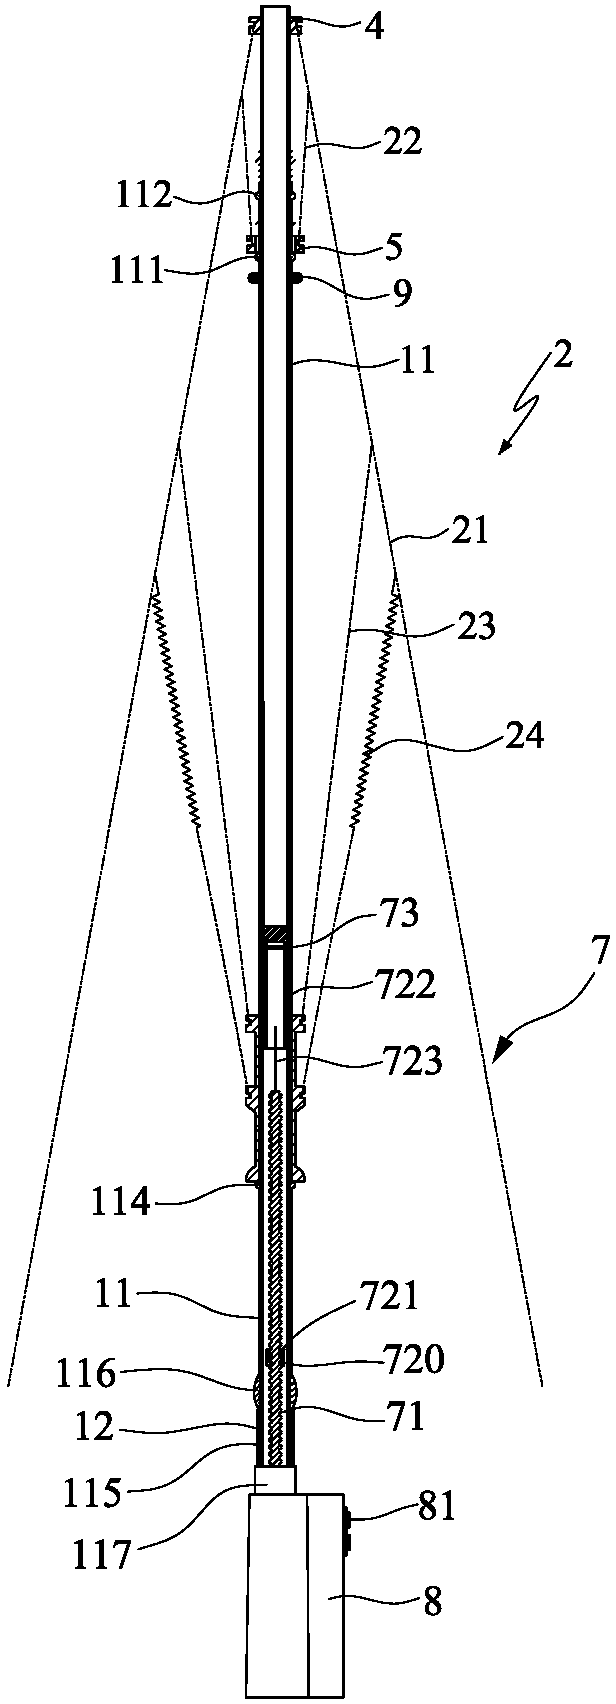 Unfolding structure of full-automatic stick umbrella